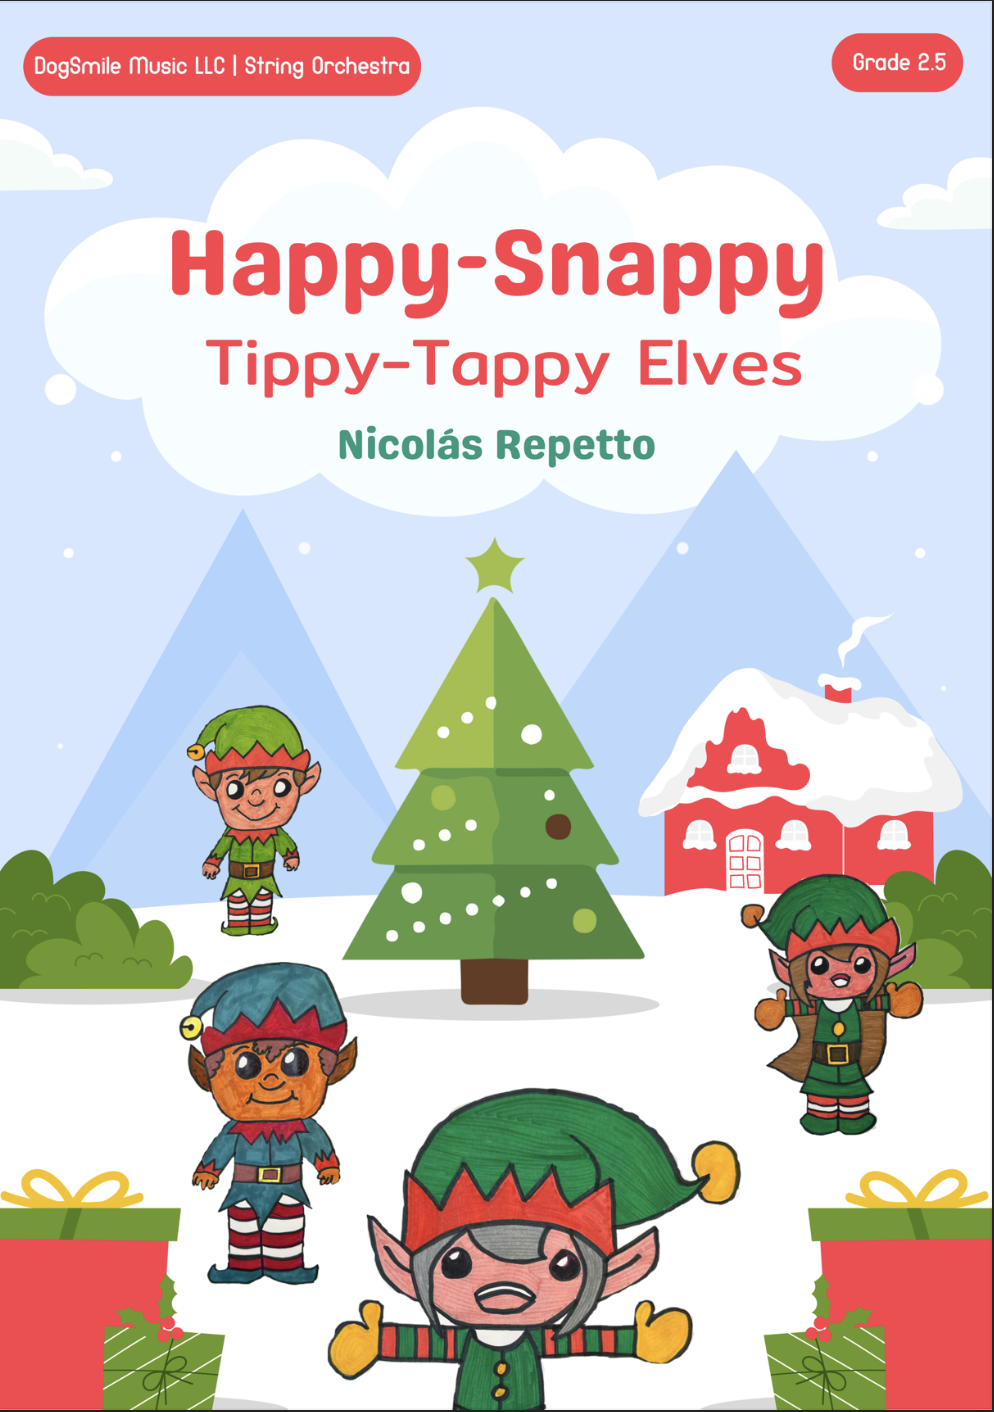 Happy-Snappy Tippy-Tappy Elves by Nicolas Repetto